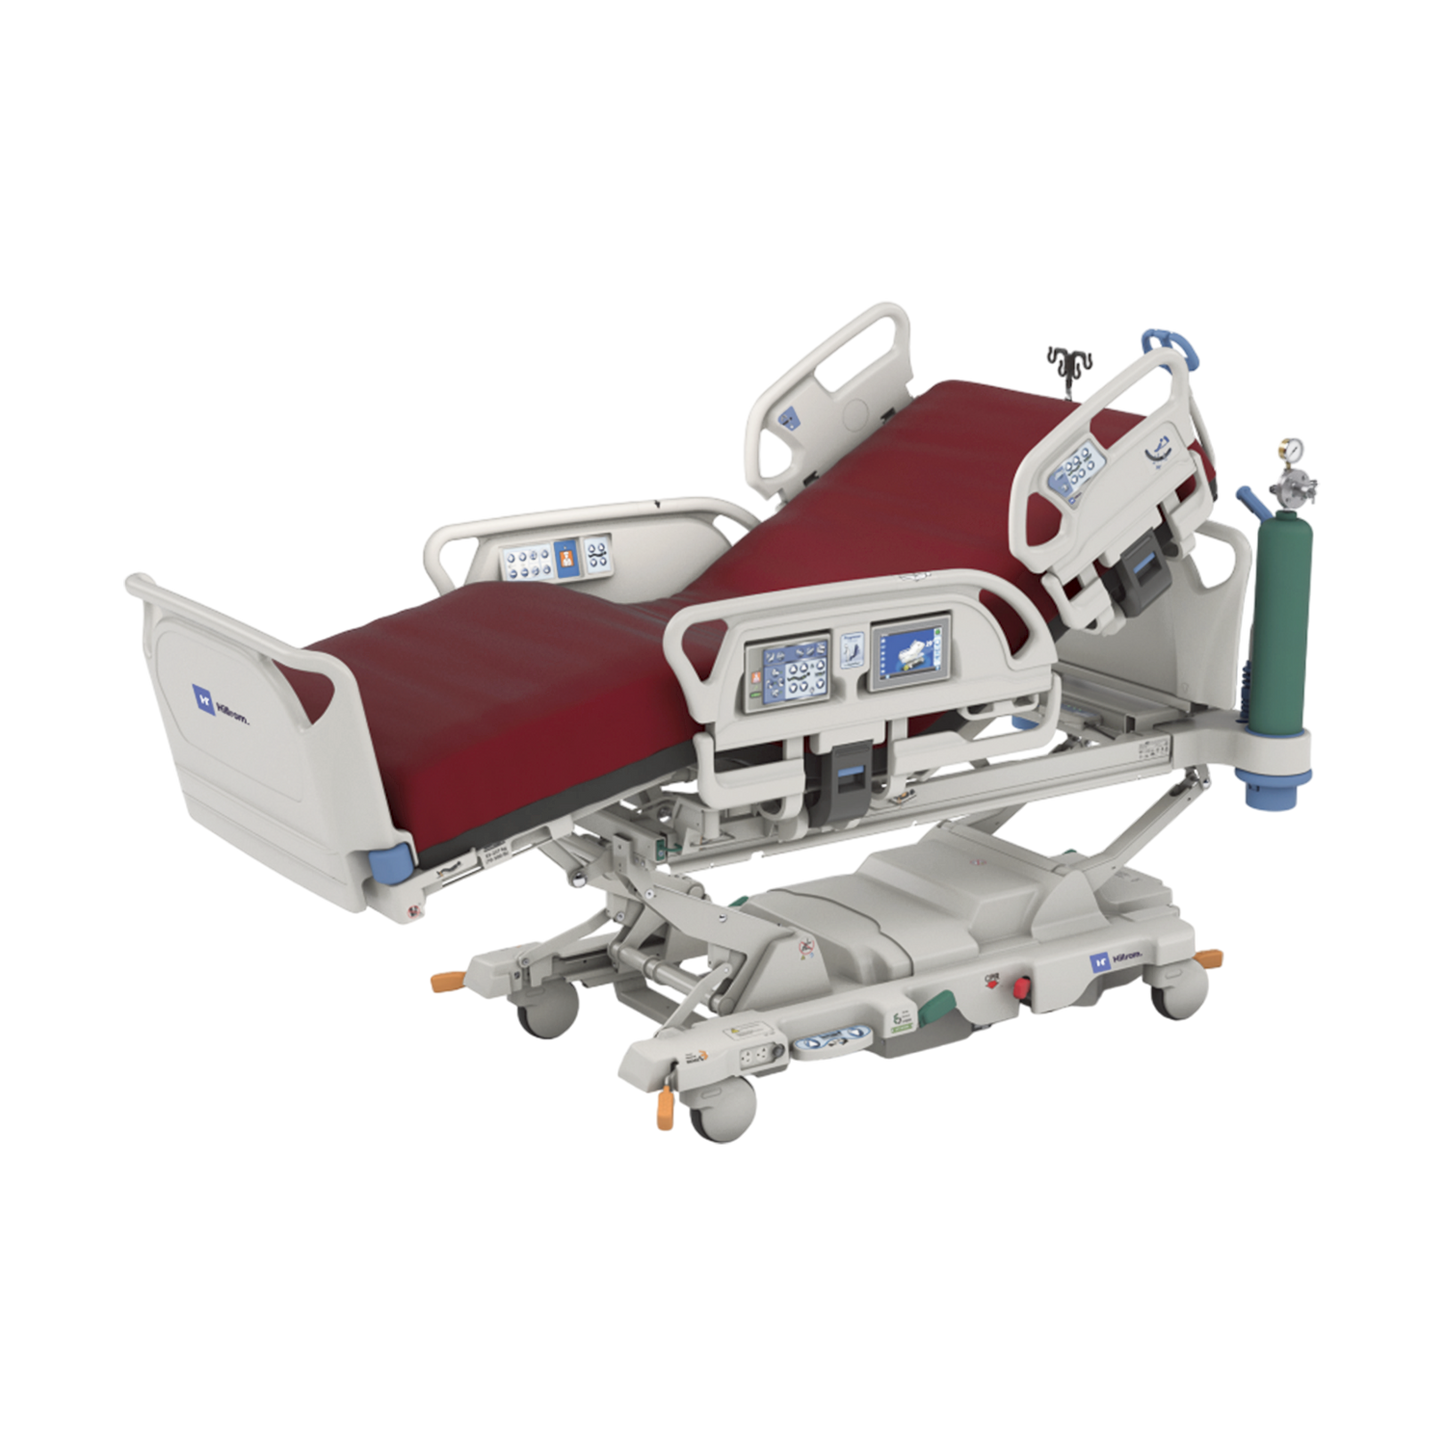 Hillrom P7500 Progressa Intelli Drive Hospital ICU Rotation P&V Pulmonary Bed